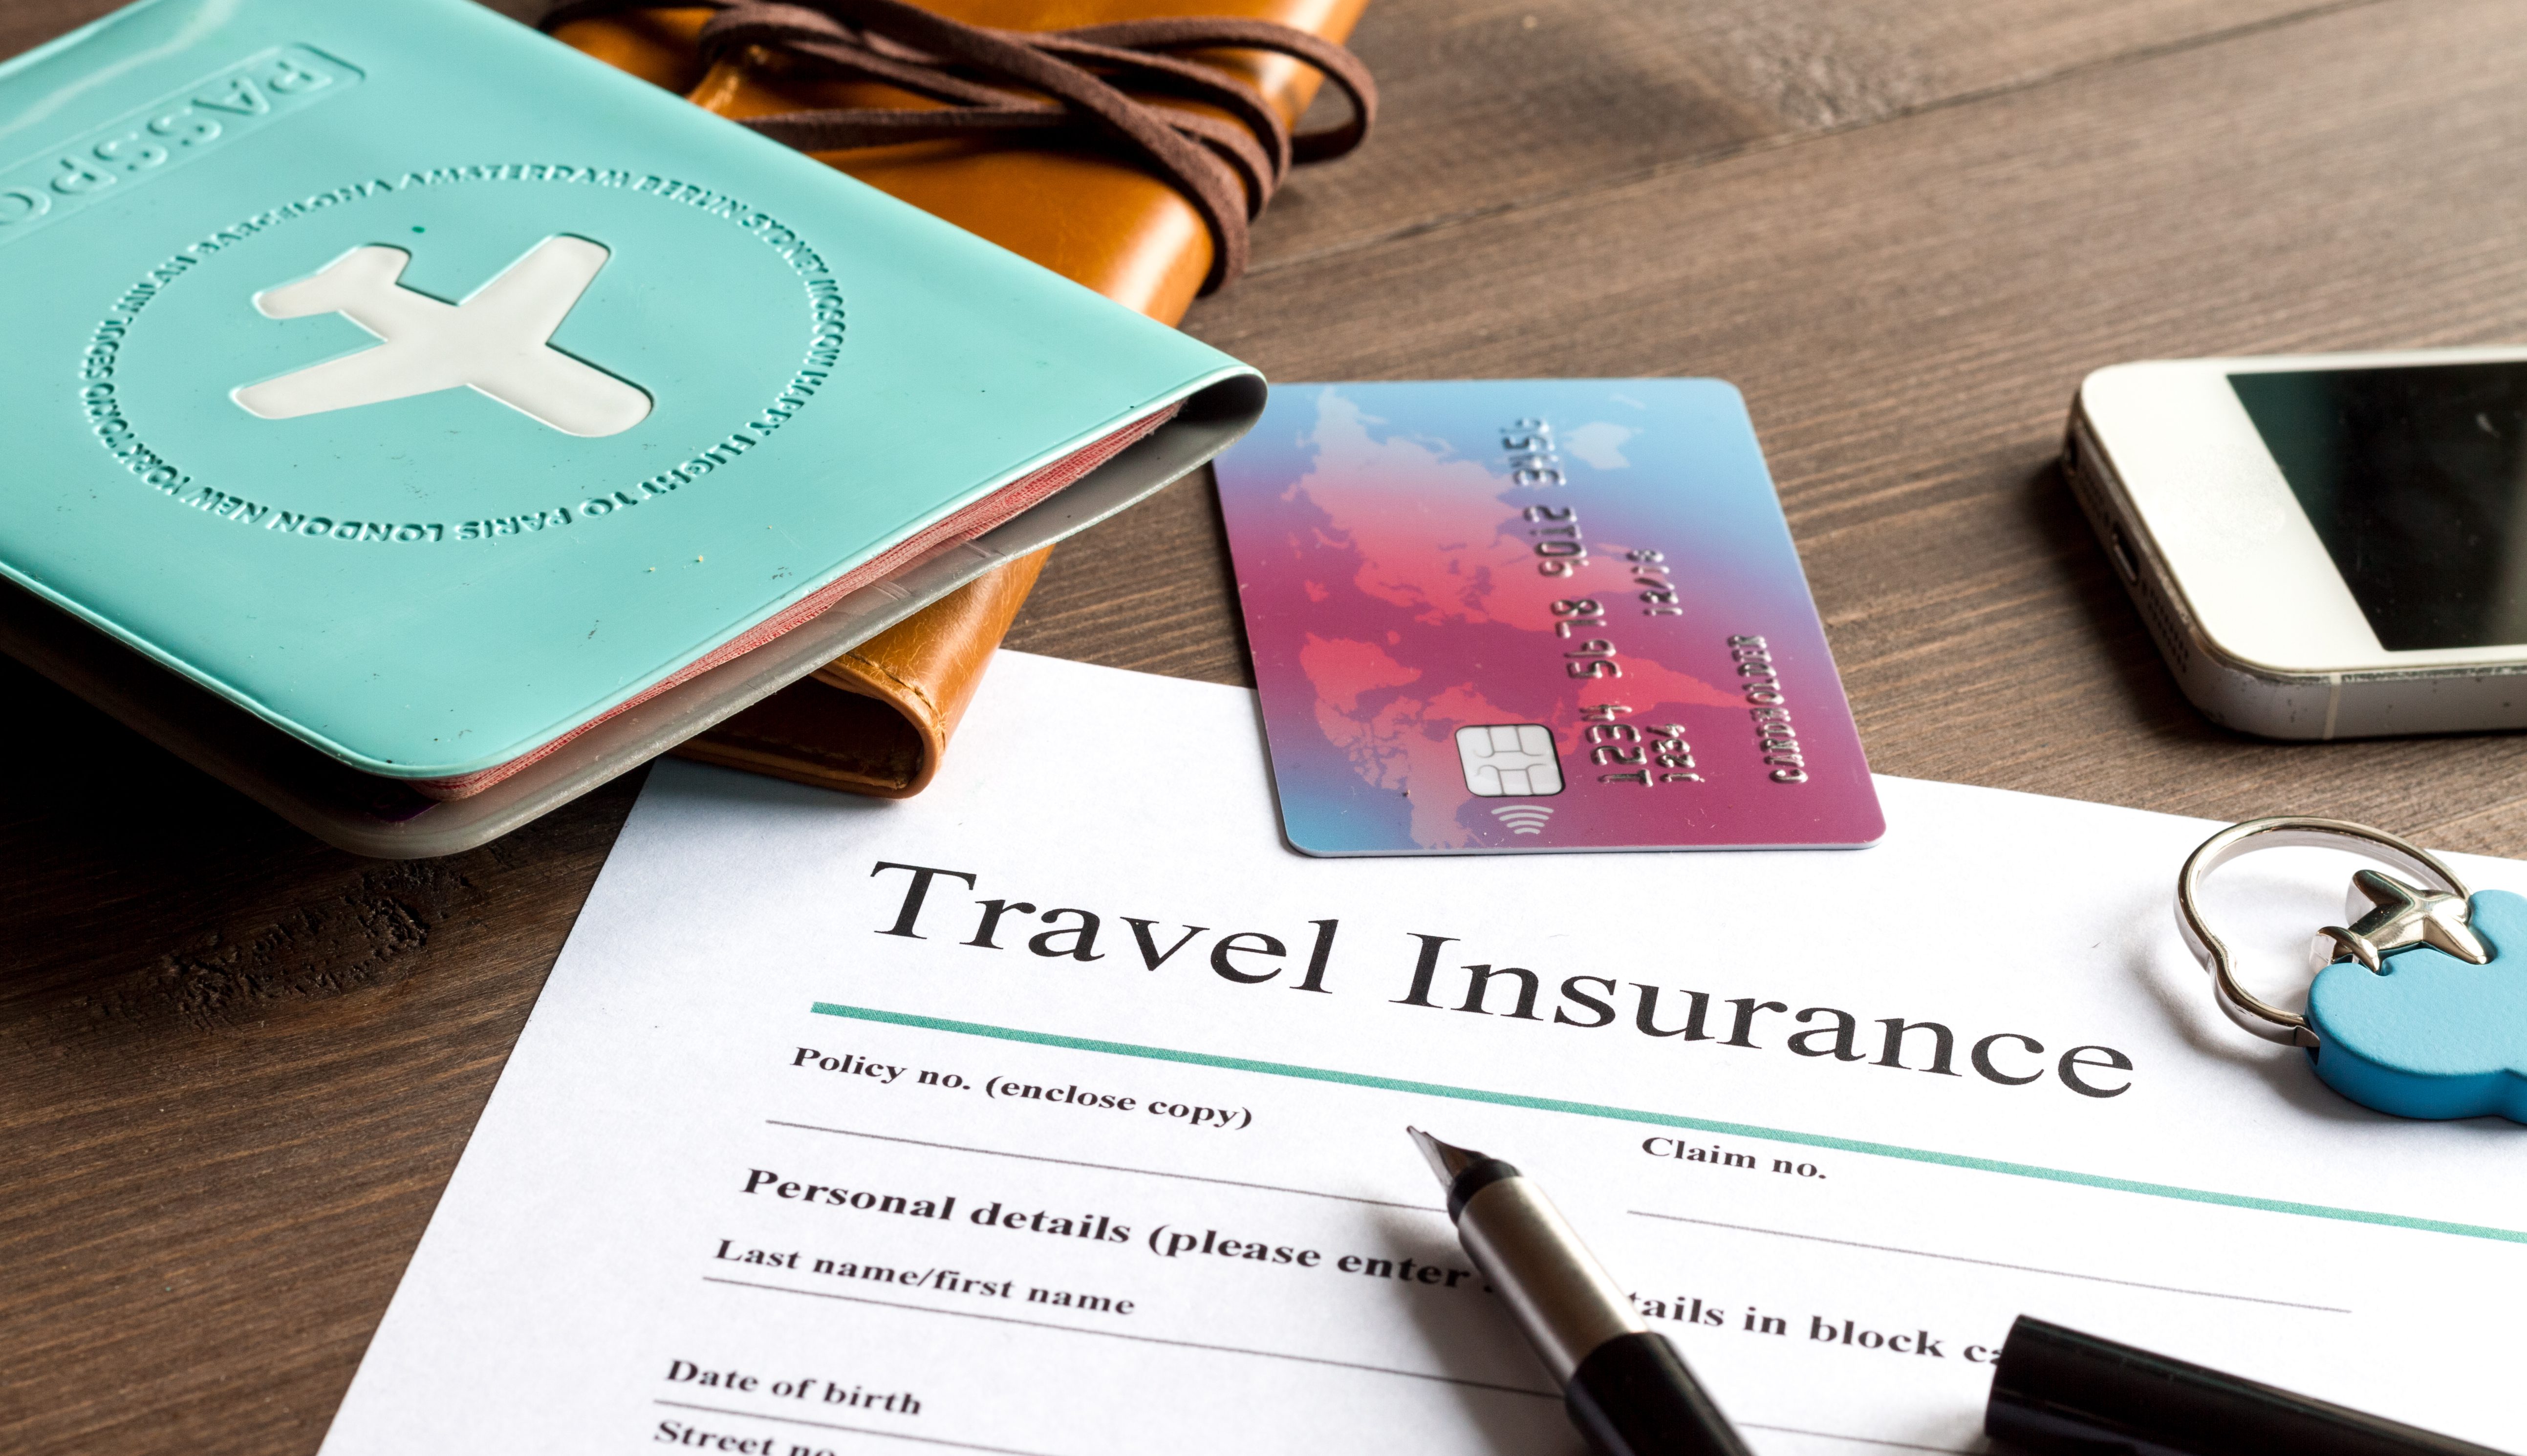 Travel Insurance Photo - Sister Cities International (SCI)